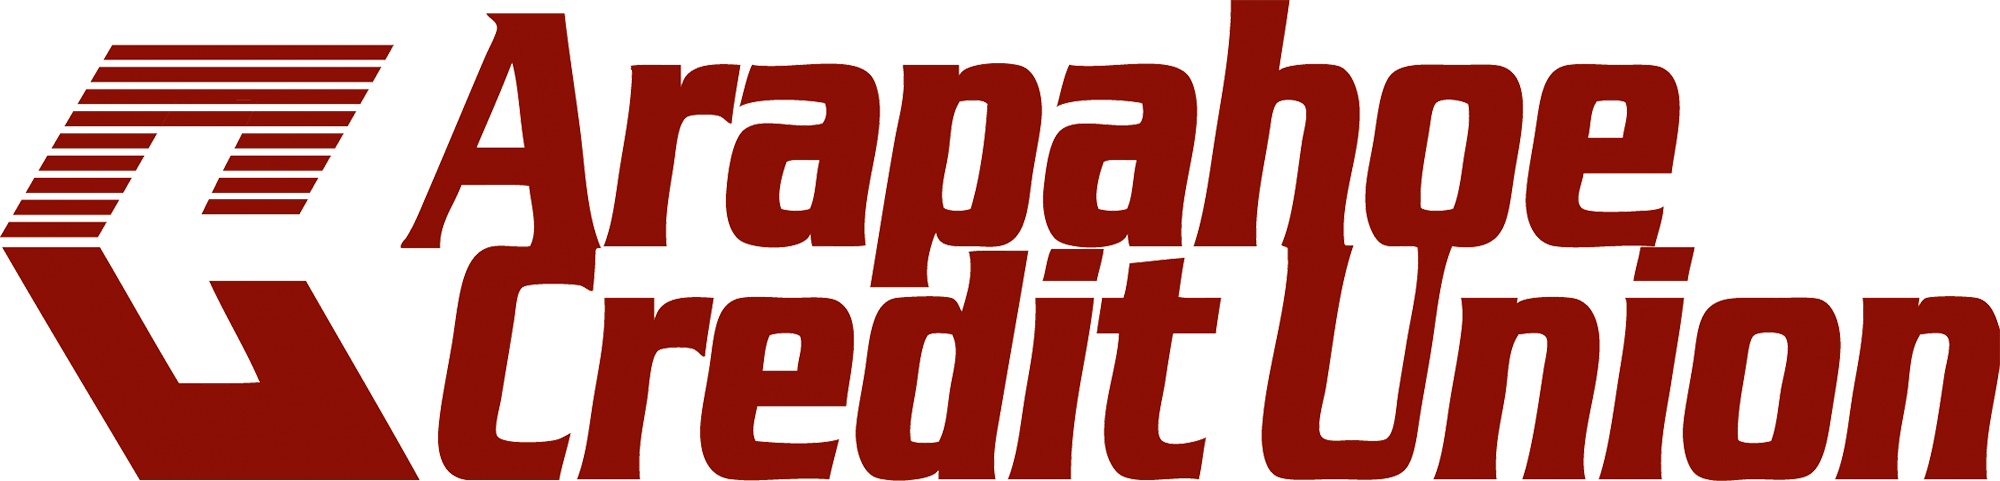 Arapahoe Credit Union Logo